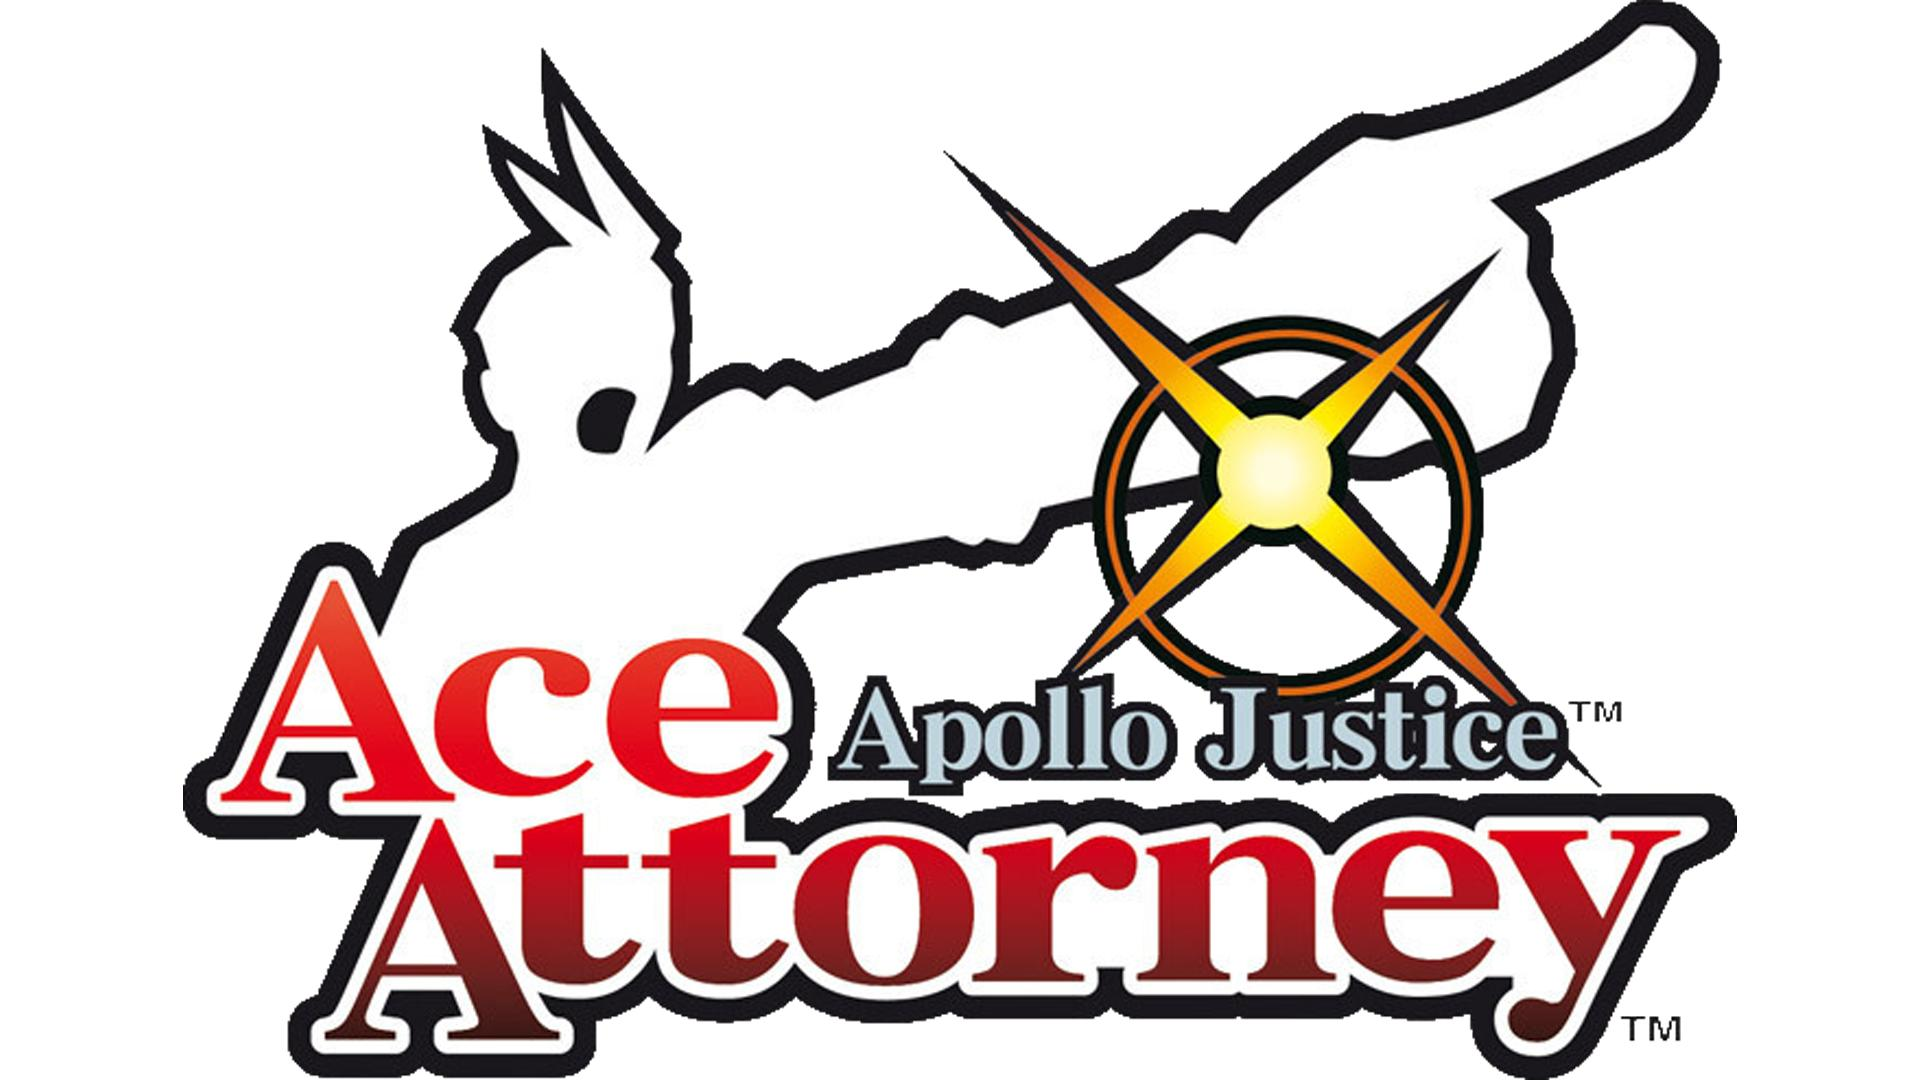 Apollo Justice: Ace Attorney Logo